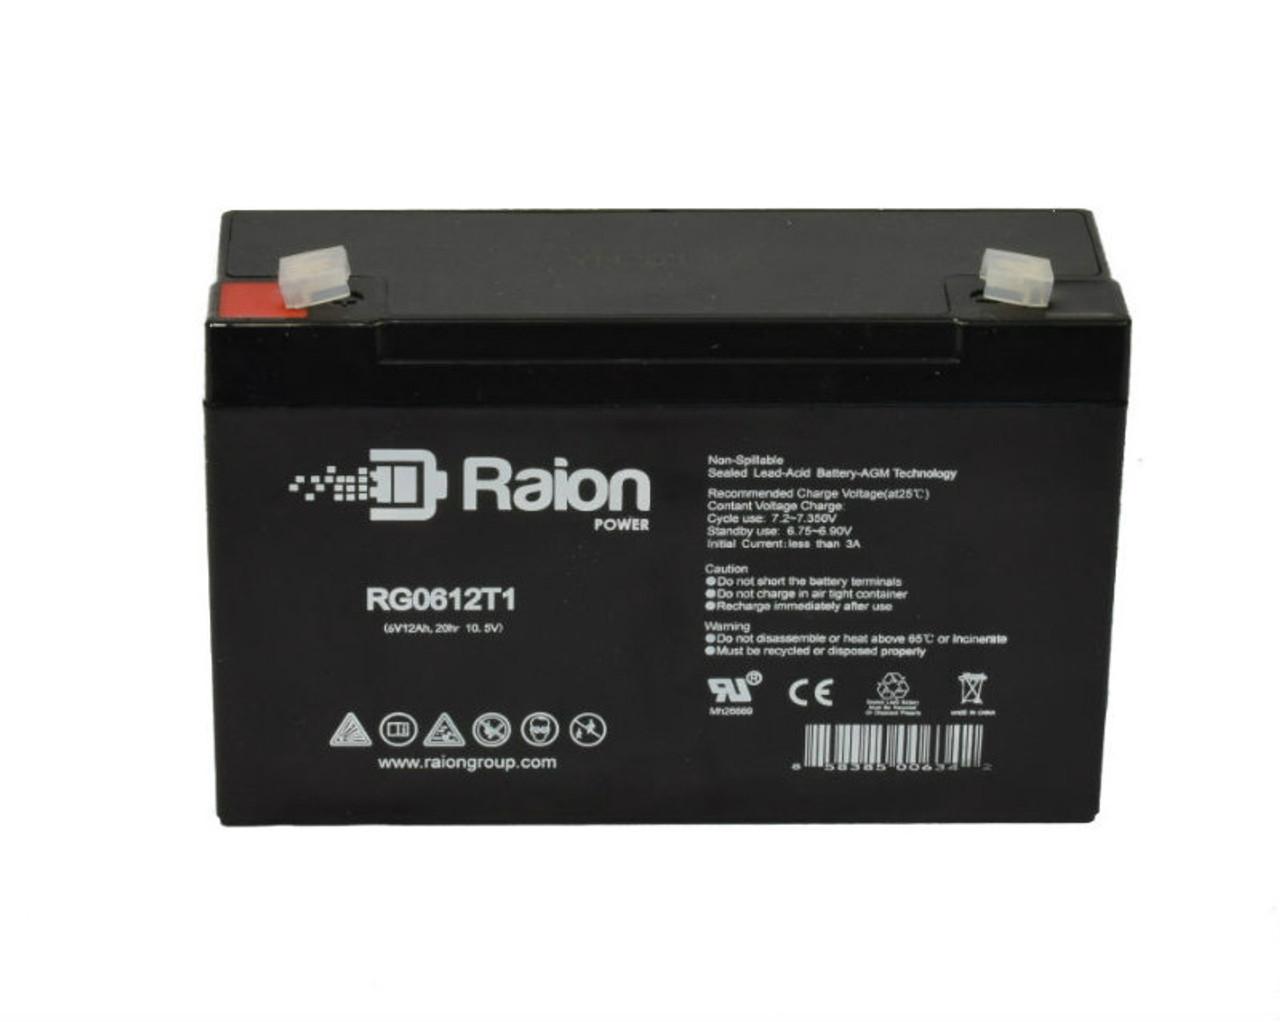 Raion Power RG06120T1 Replacement Battery Cartridge for Tripp Lite RBC52